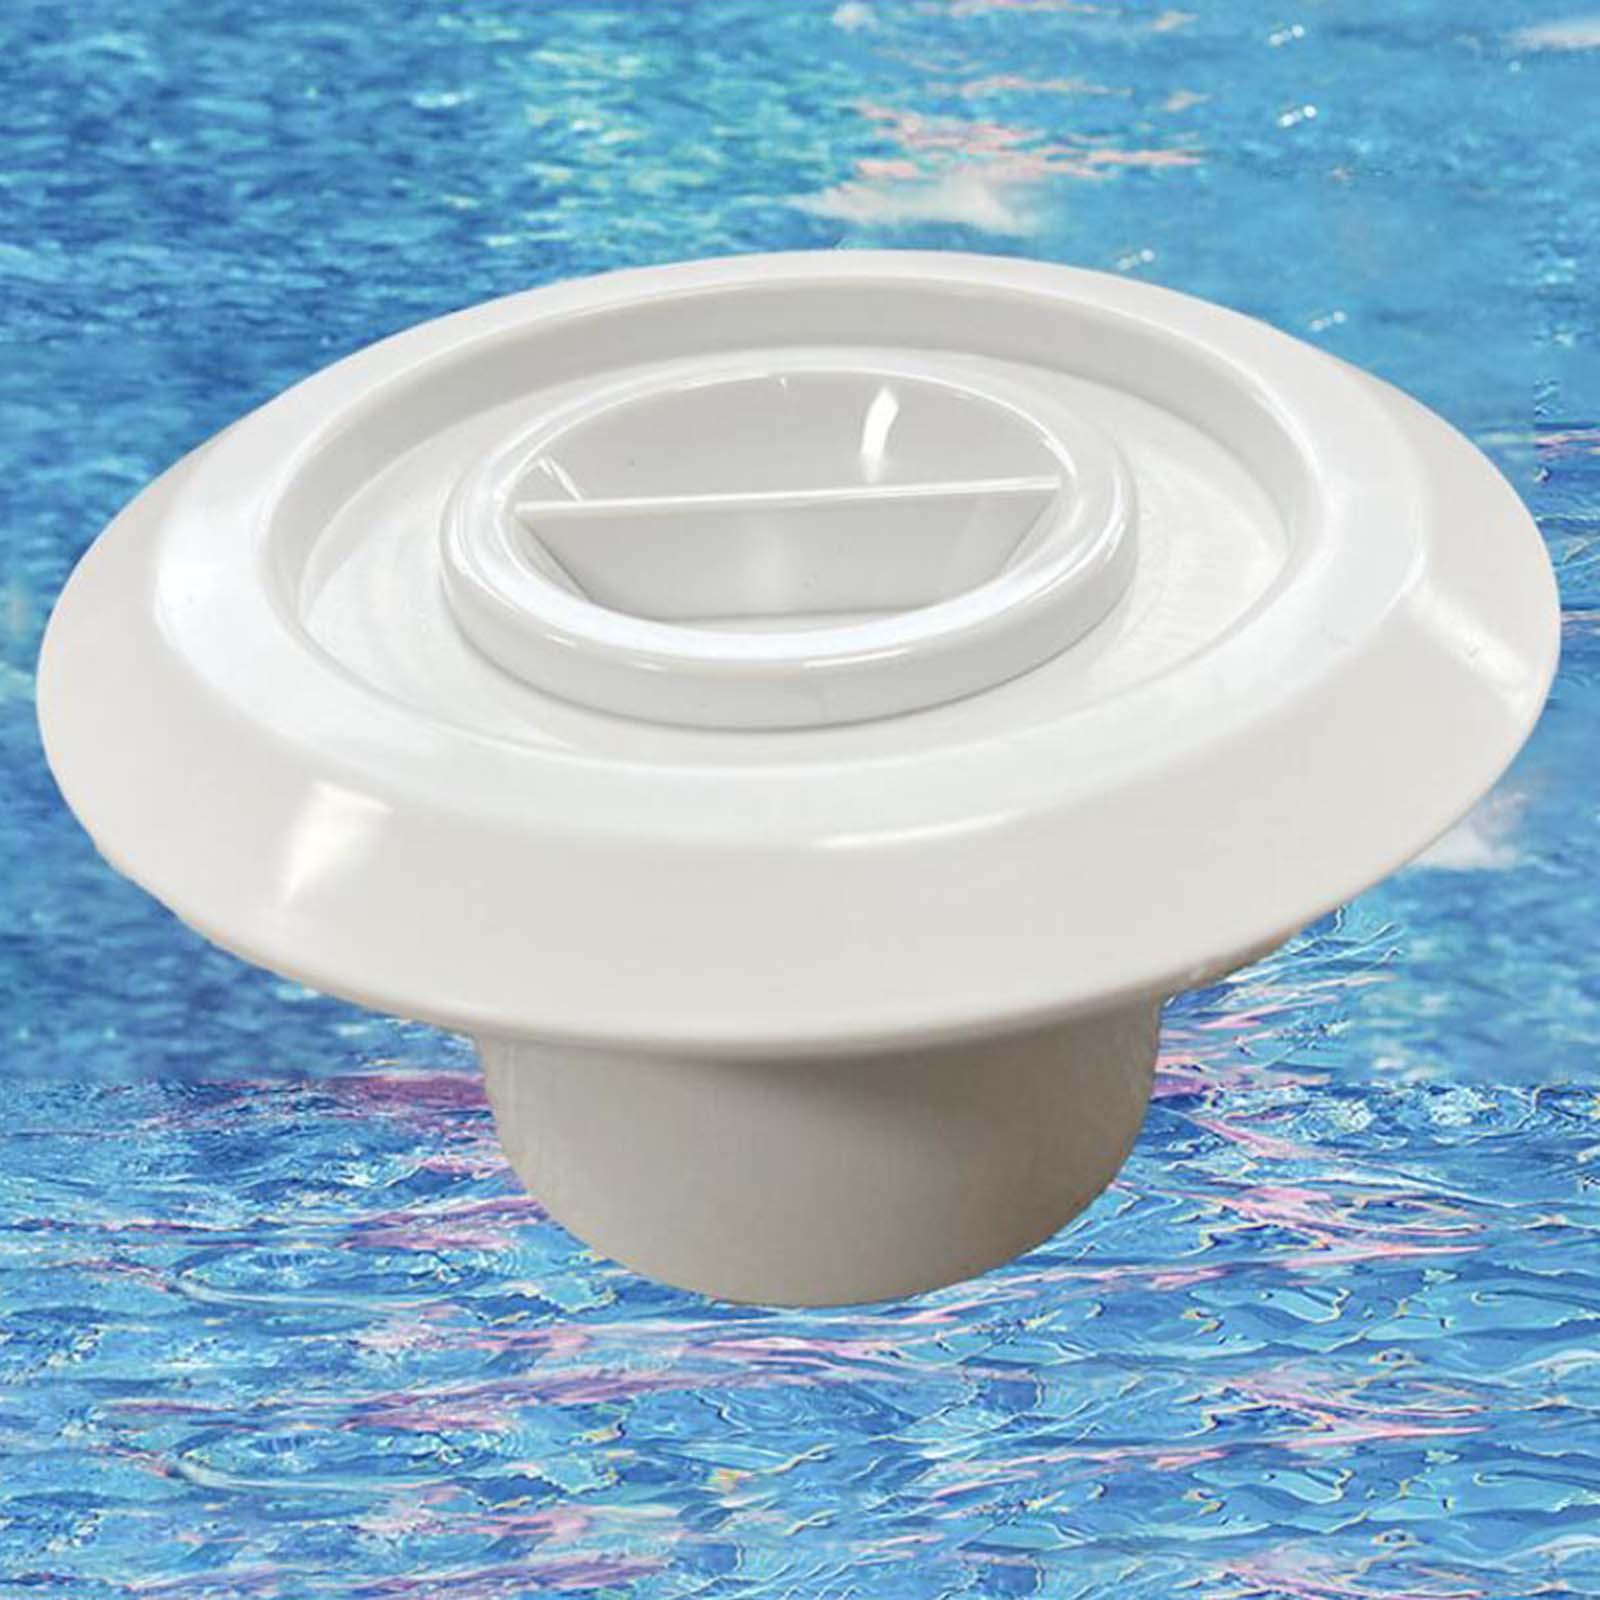 SPA Accessories Filter Pool Main Drain Floor Drain for Pool Massage